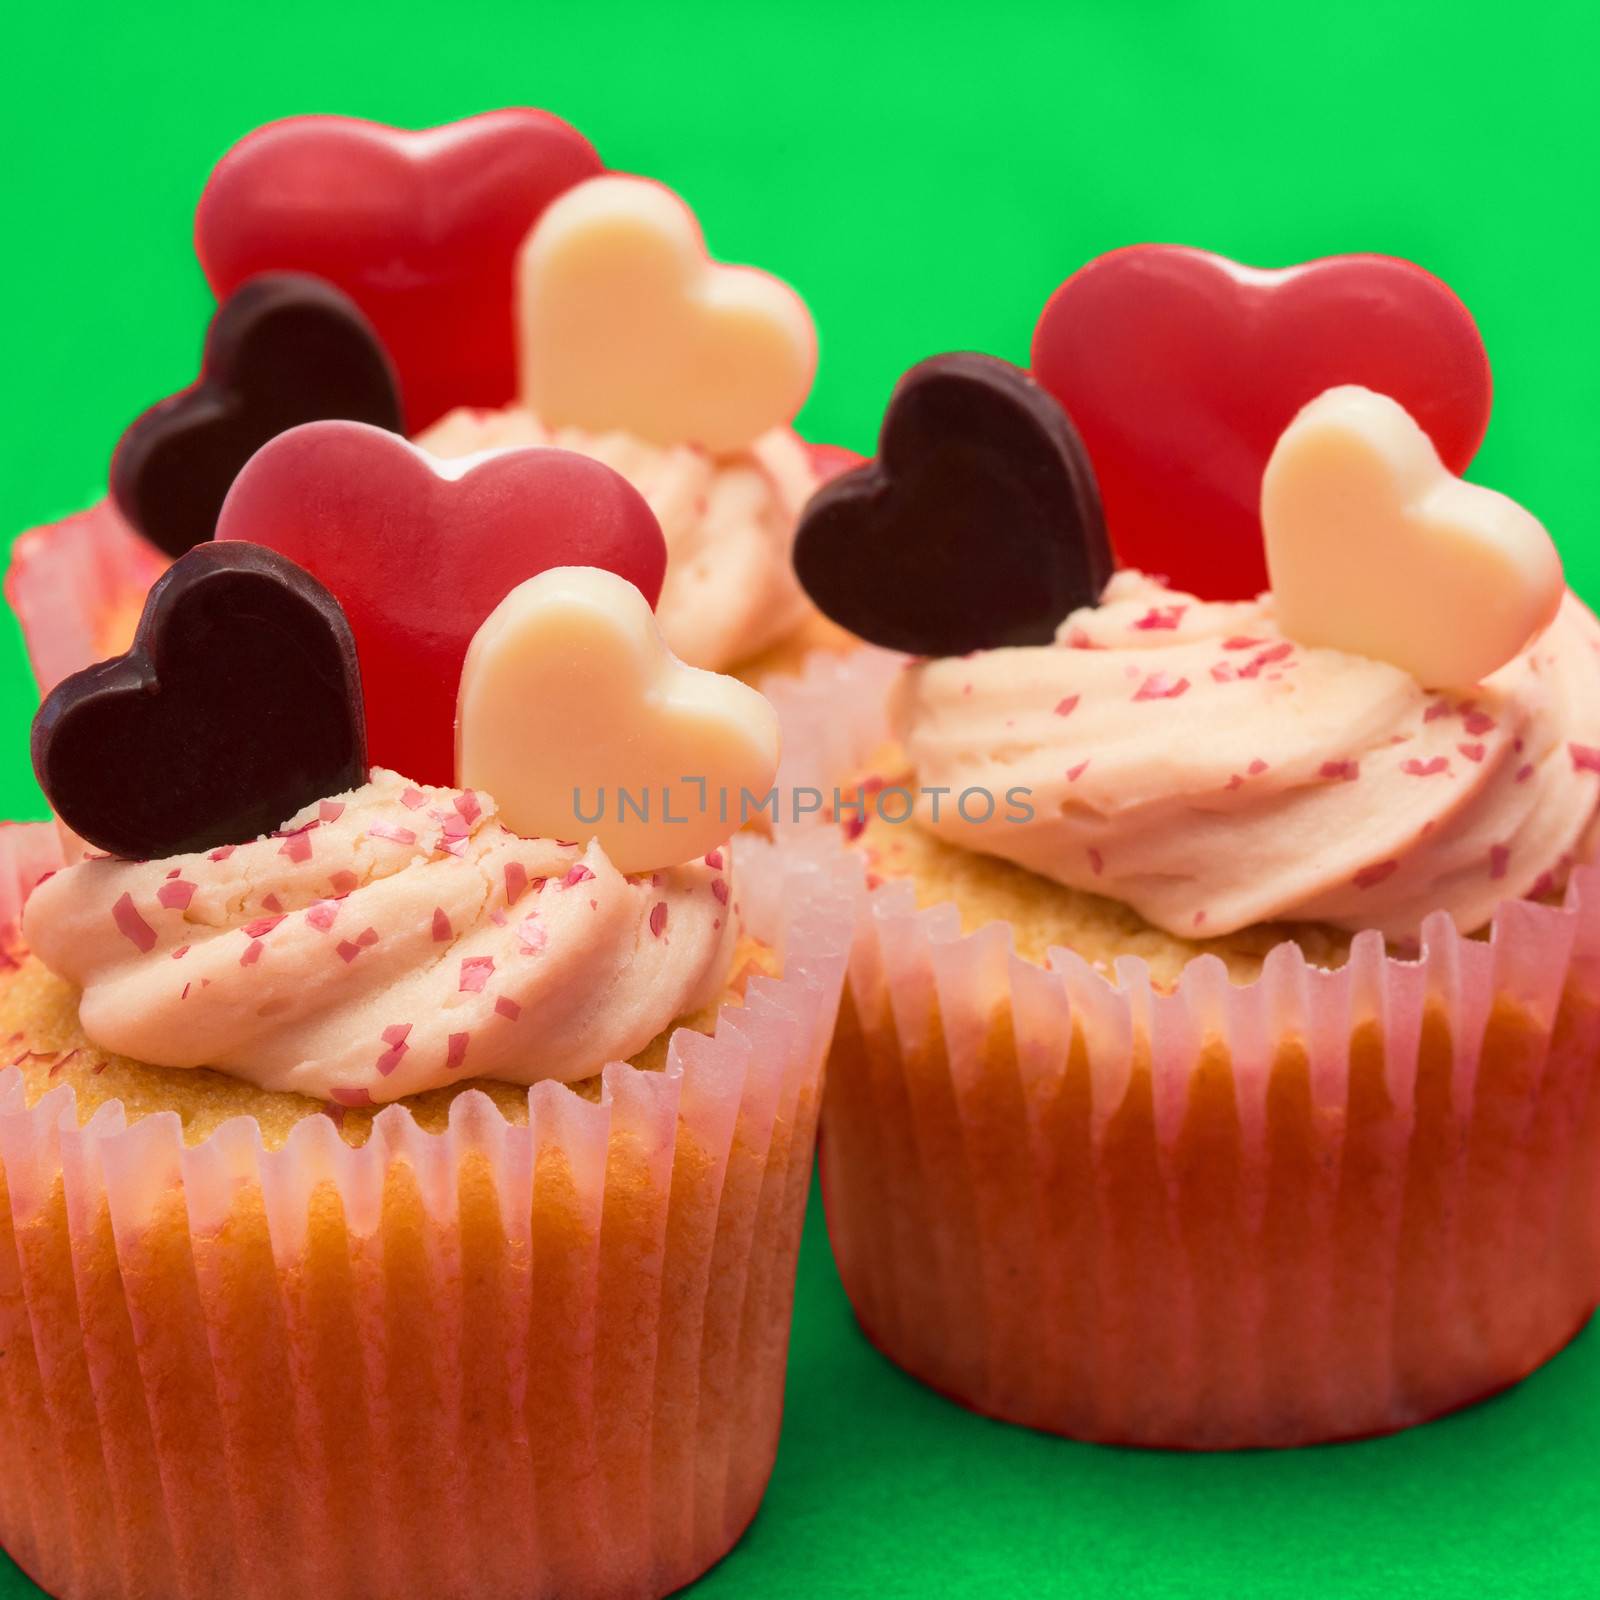 Close up of three valentines cupcakes by Wavebreakmedia